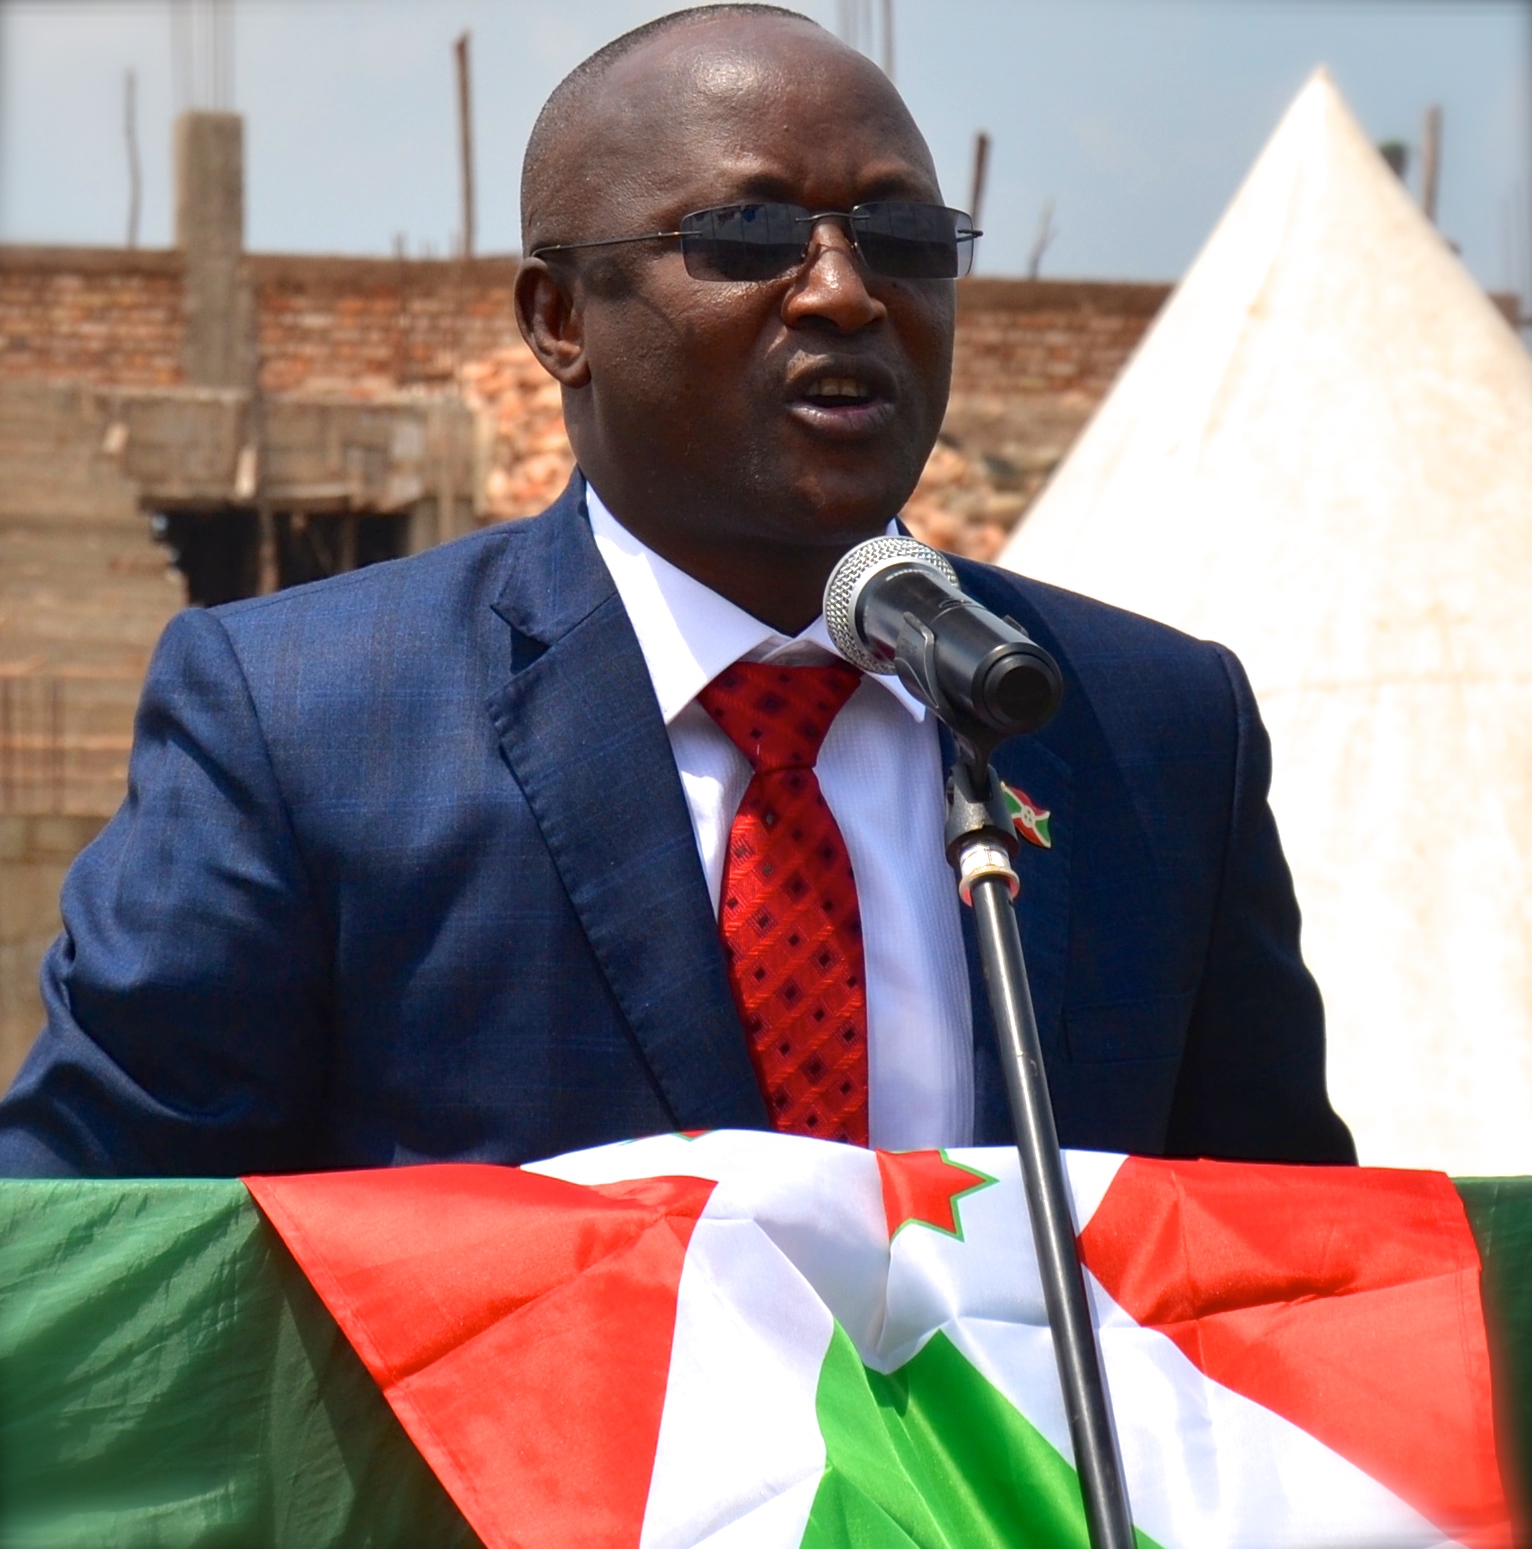 ANNOUNCED ICC WITHDRAWAL PLANS: Burundi Vice President Gaston Sindimwo